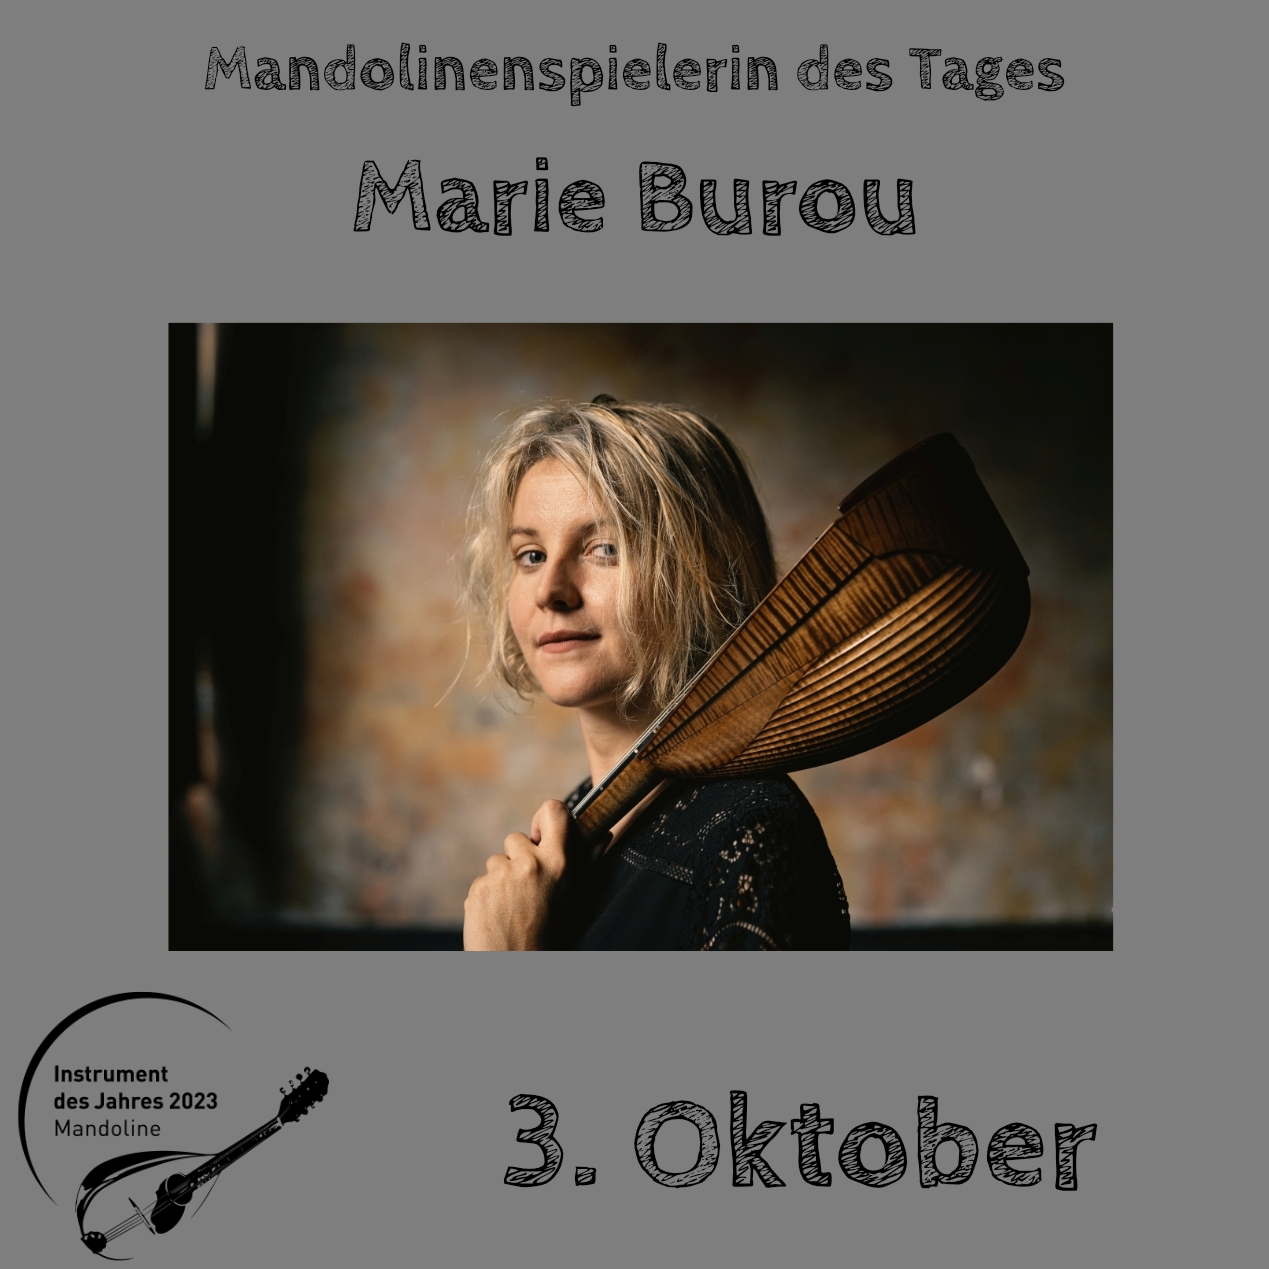 3. Oktober - Marie Burou Mandoline Instrument des Jahres 2023 Mandolinenspieler Mandolinenspielerin des Tages